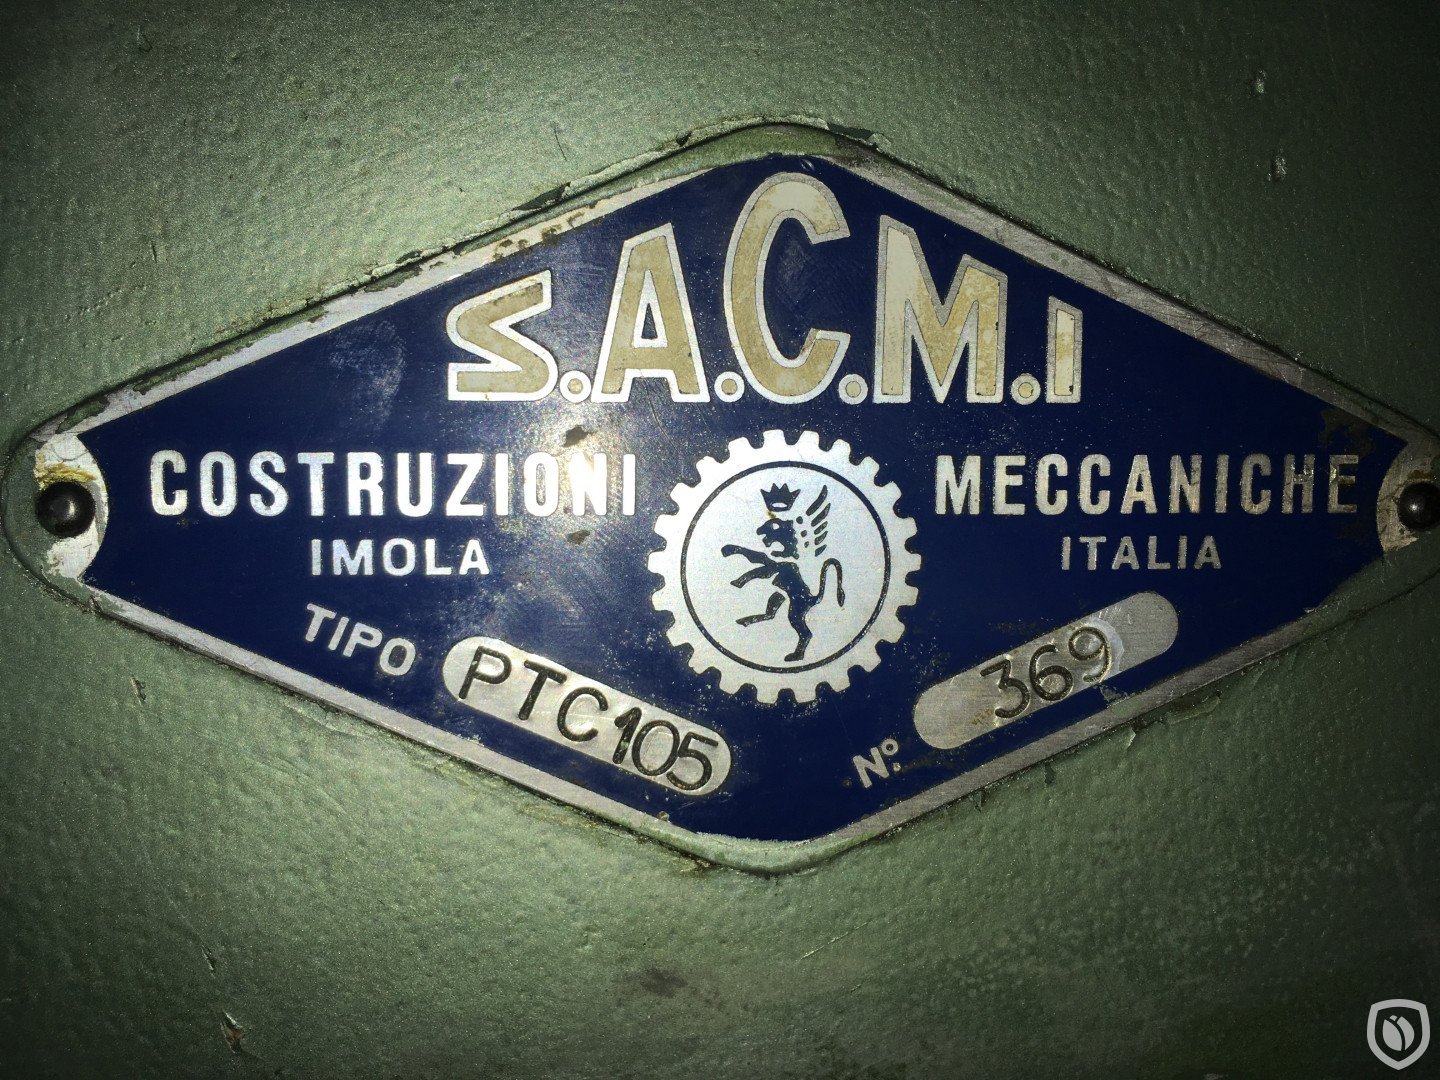 Sacmi press identification plate